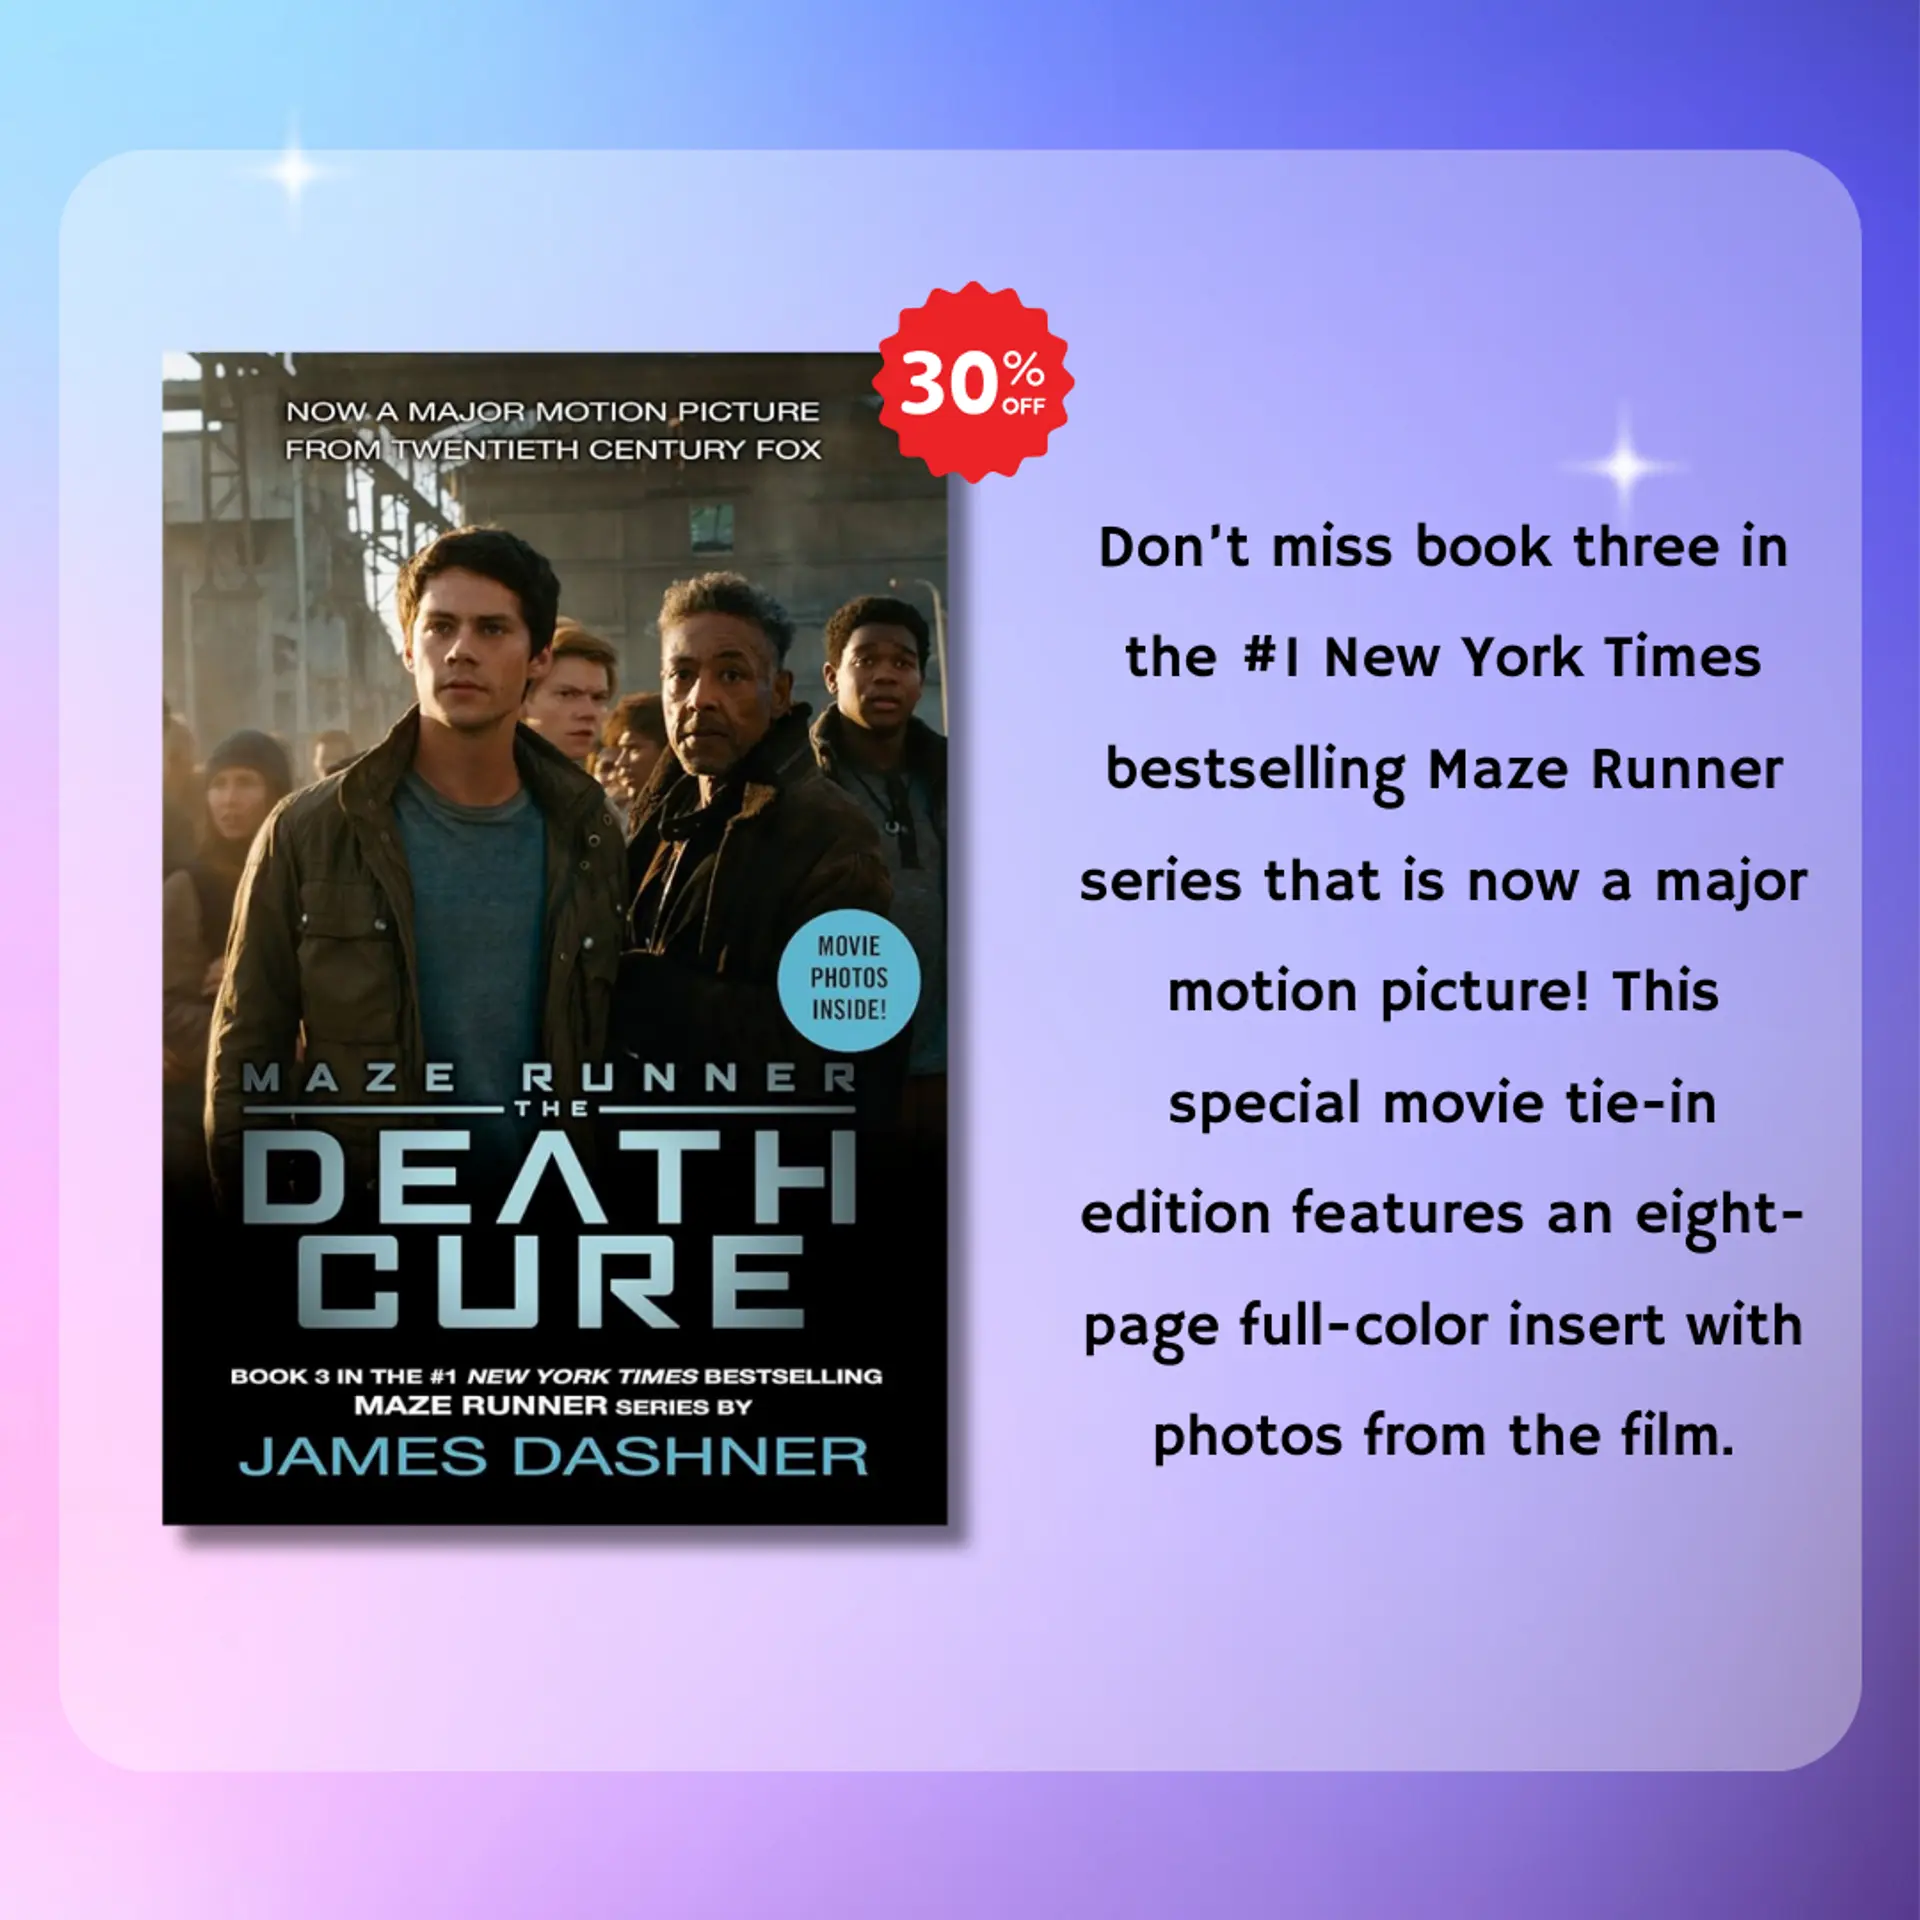 The Death Cure - James Dashner - The Maze Runner Series